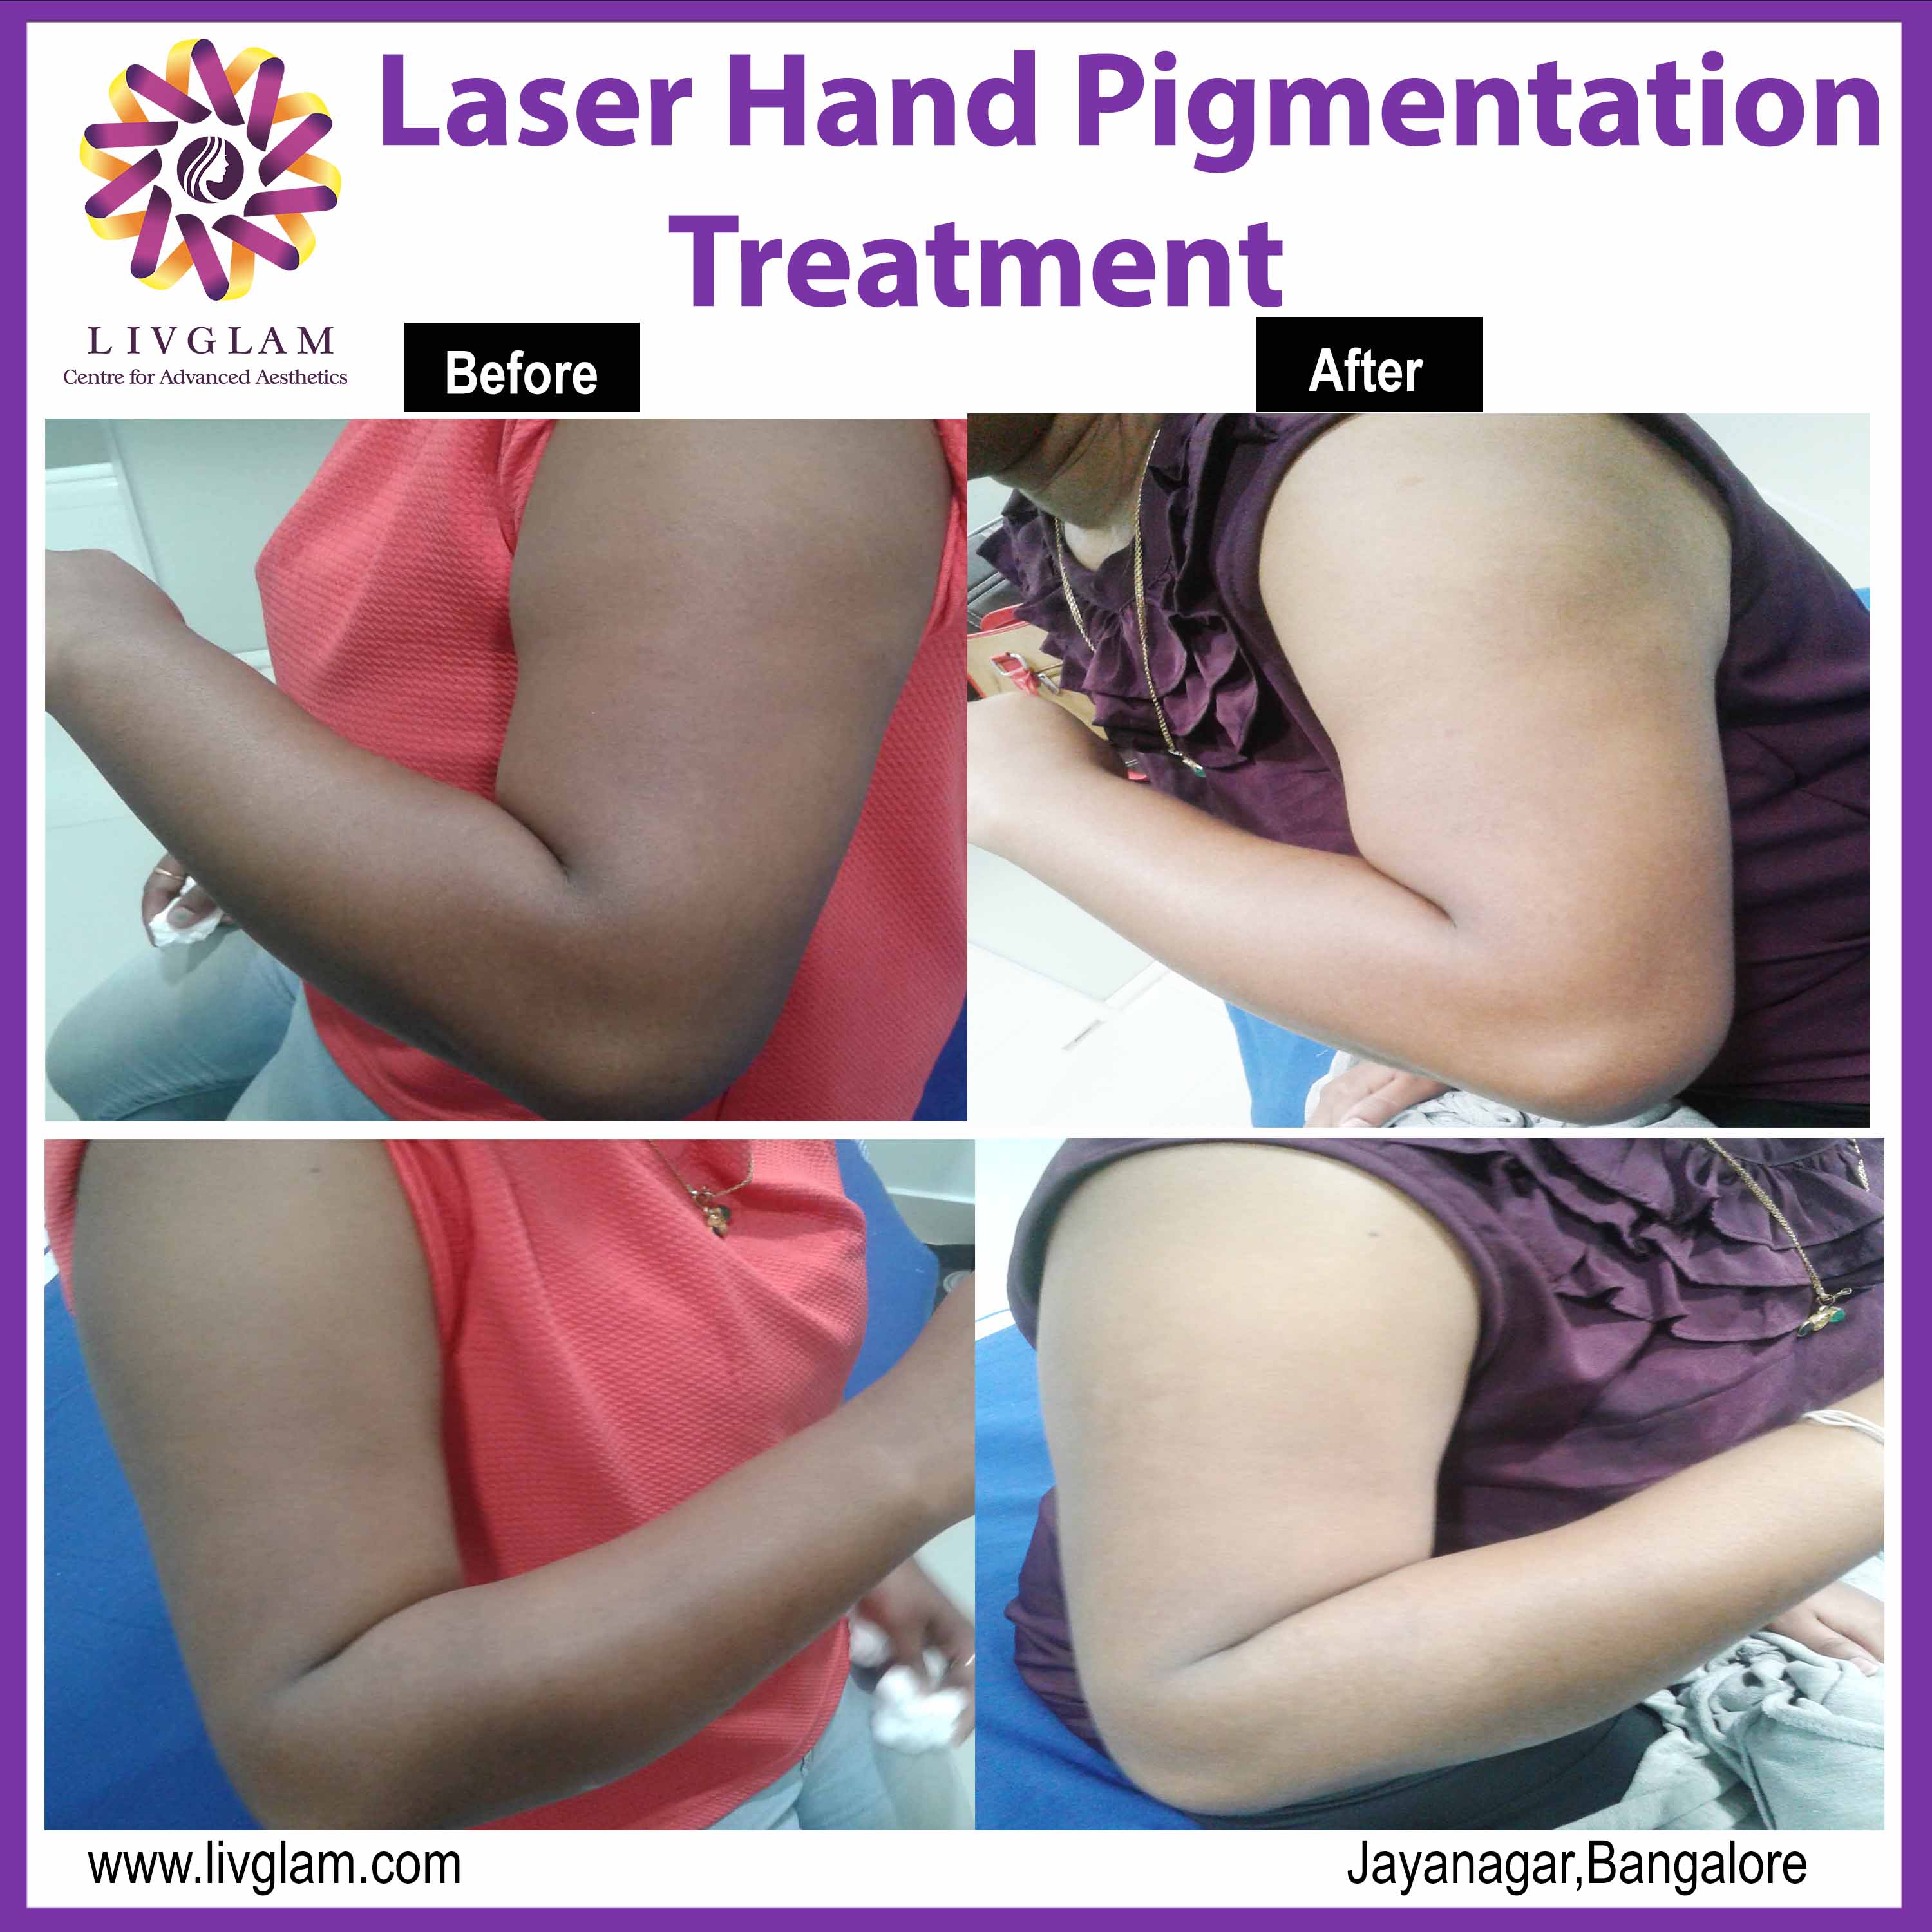 Laser pigmentation treatment for hands